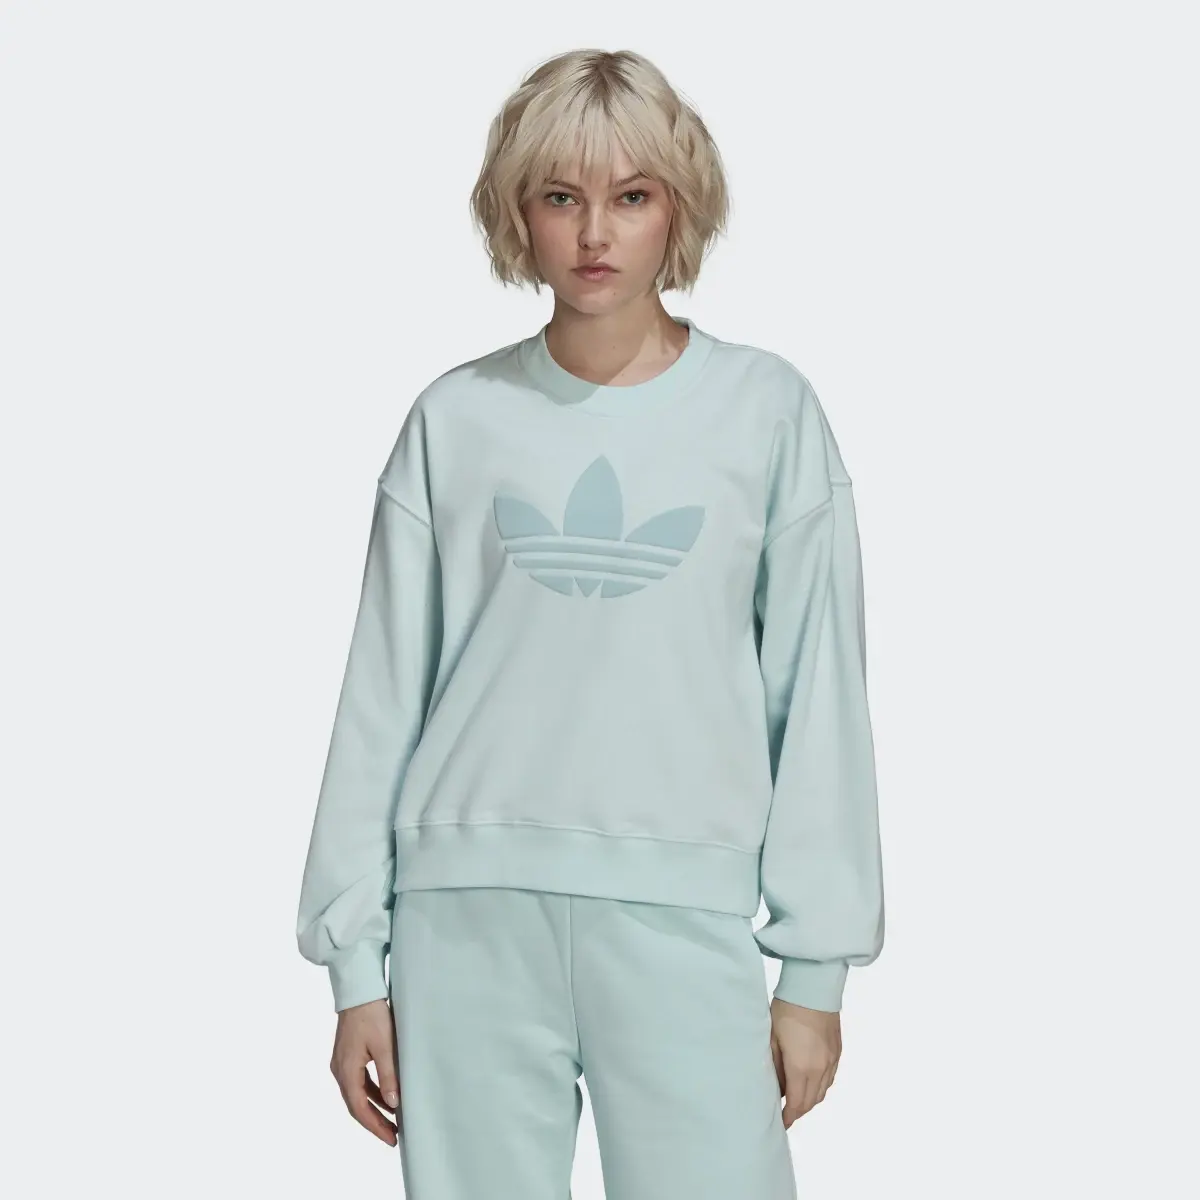 Adidas Crew Sweatshirt. 2